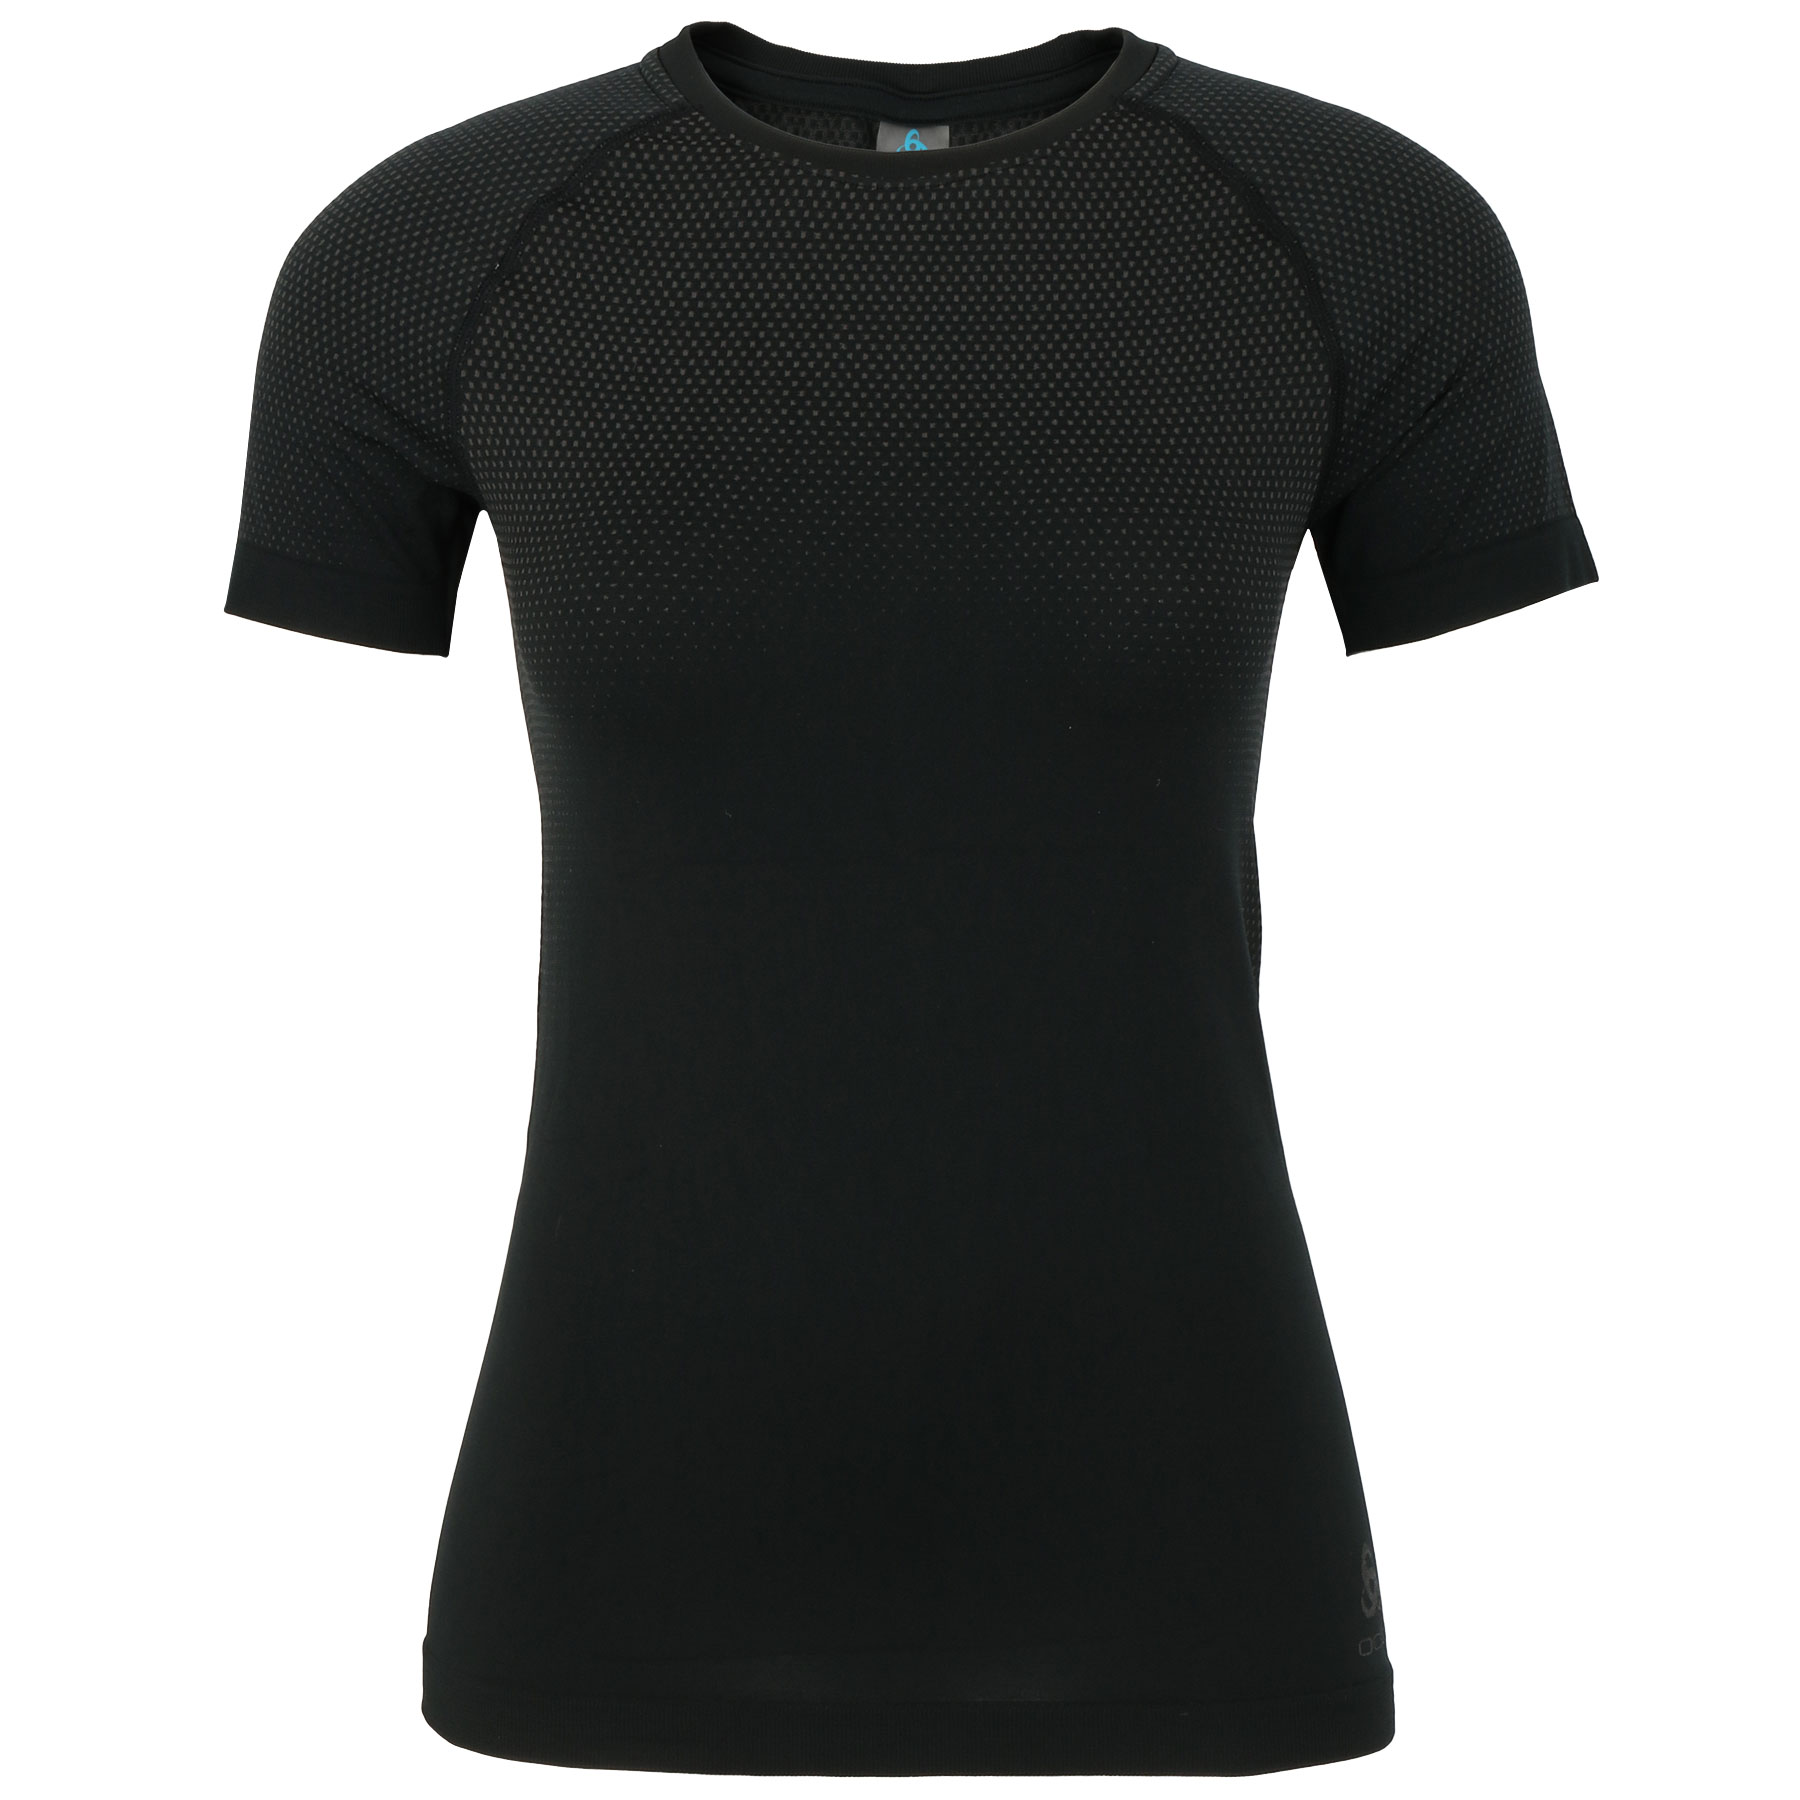 Produktbild von Odlo Performance Light Kurzarm-Unterhemd Damen - schwarz